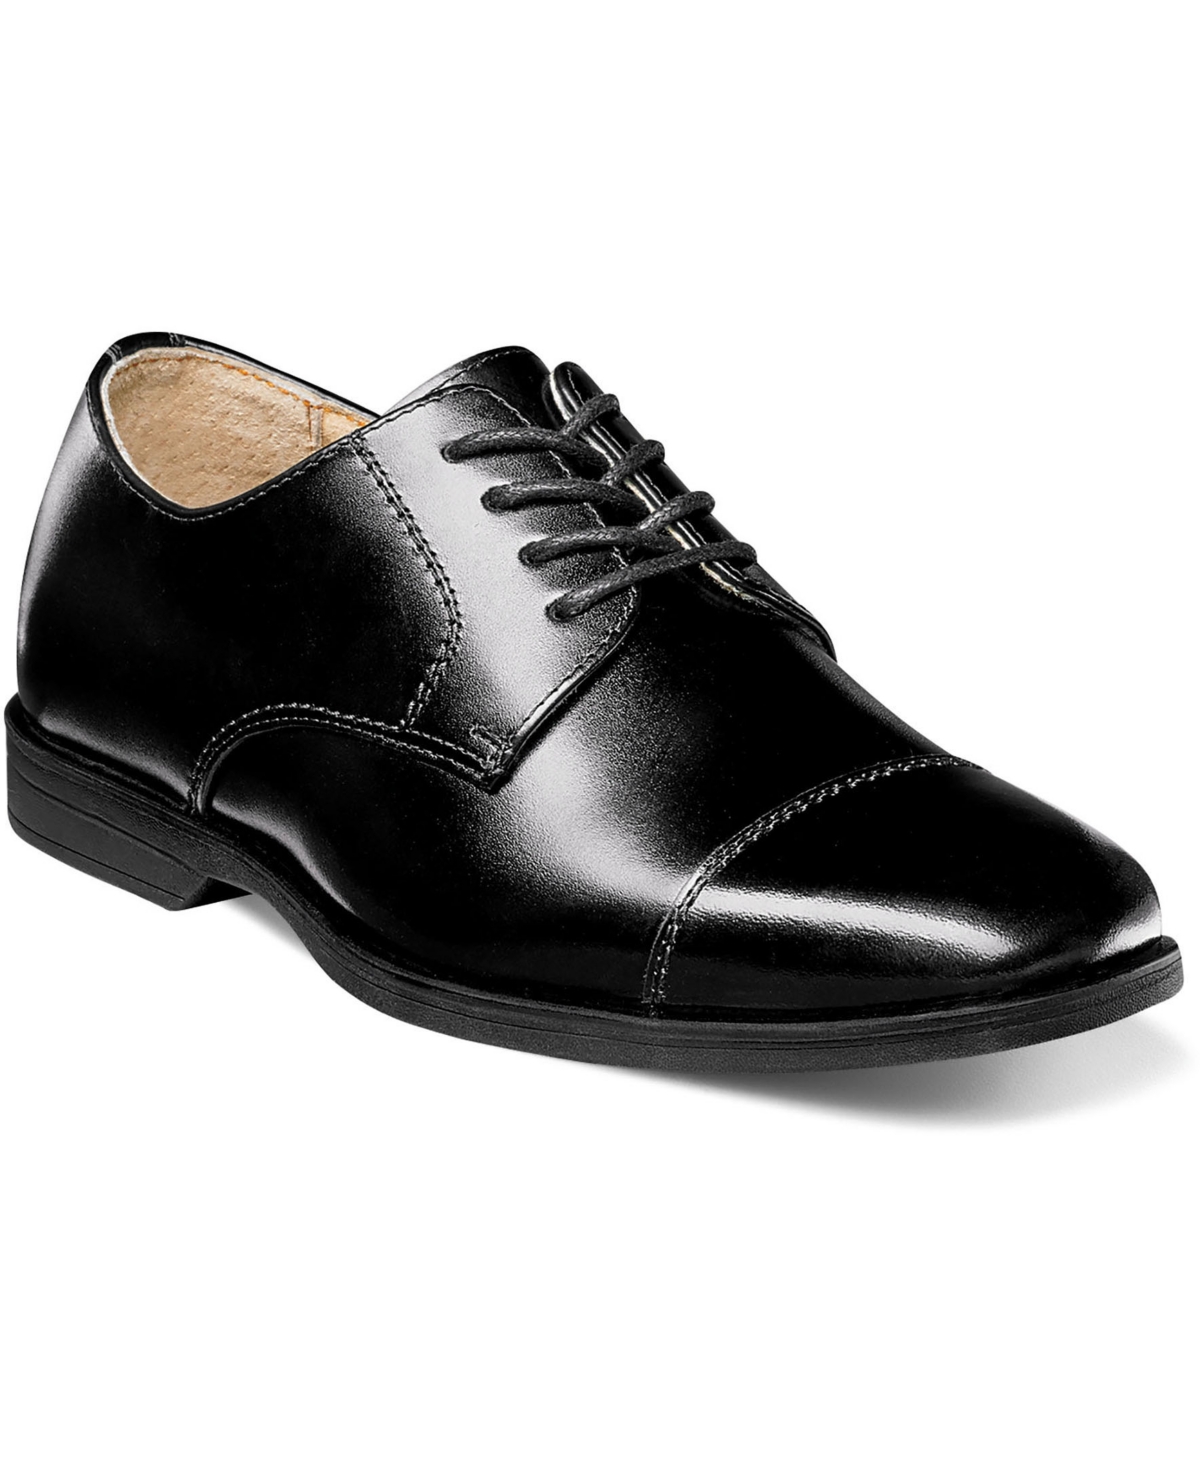 Men's Sedagatti ltalian Dress Shoes Formal Wing Tip Oxford Fashion Cognac SED119 